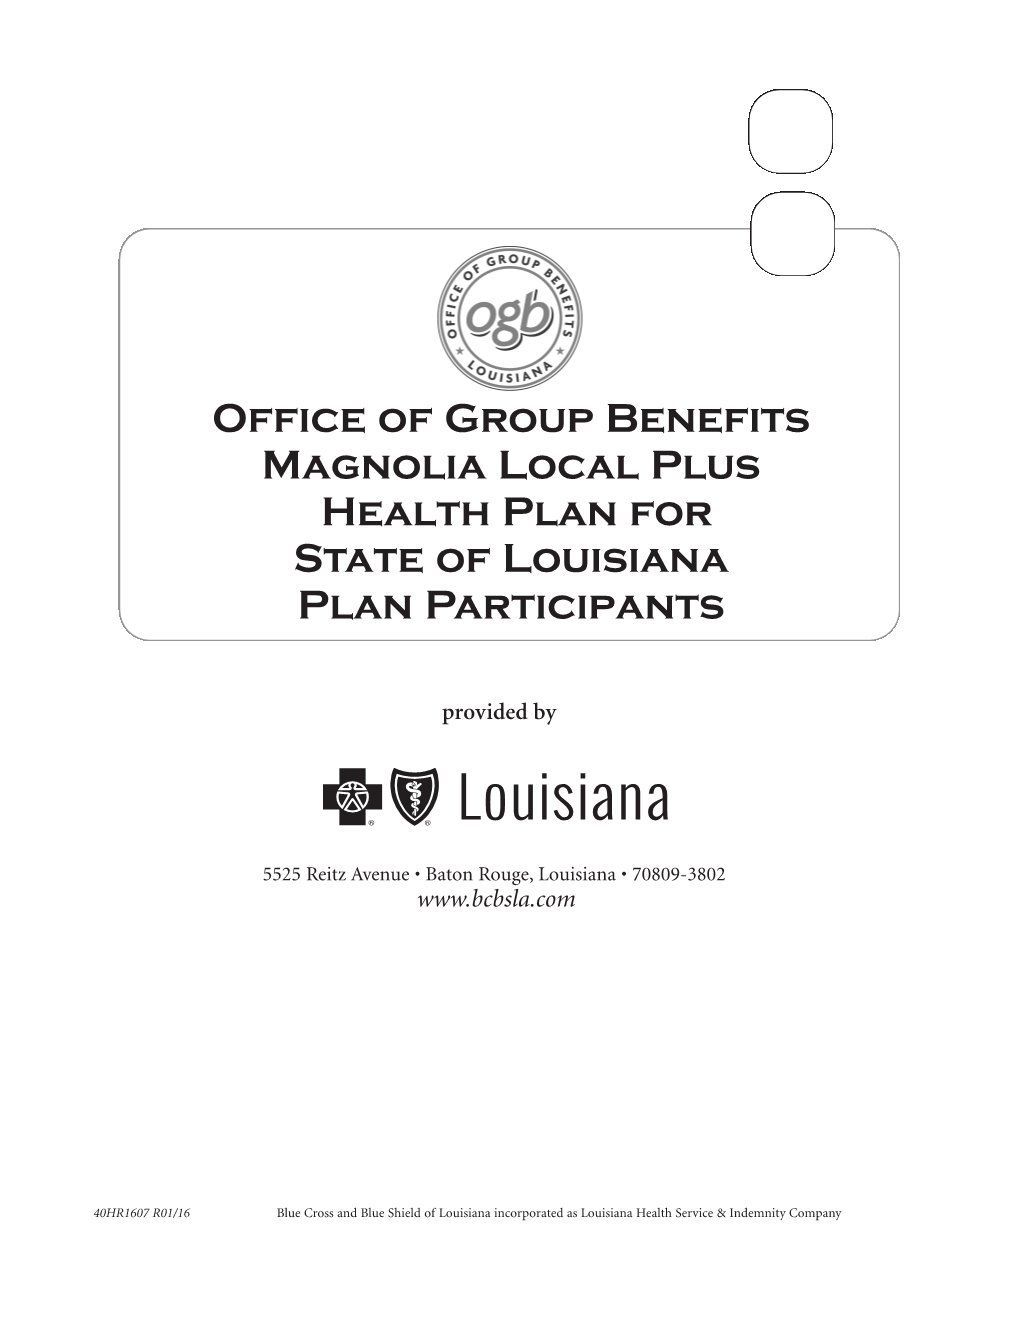 Blue Cross and Blue Shield of Louisiana Incorporated As Louisiana Health Service & Indemnity Company